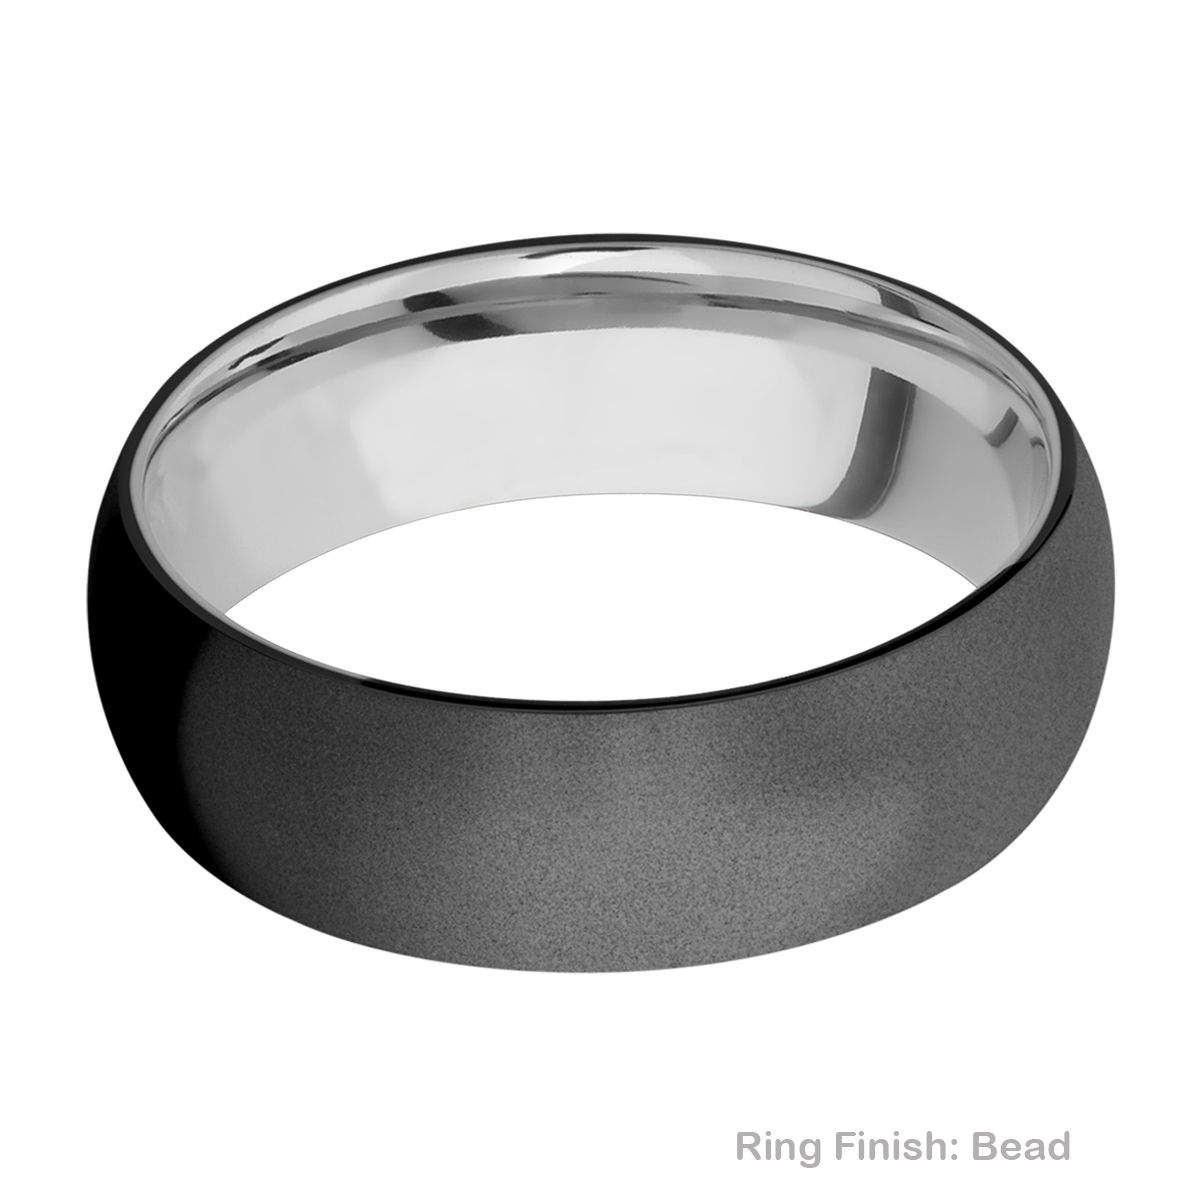 Lashbrook CCSLEEVEZ7D Zirconium and Cobalt Chrome Wedding Ring or Band Alternative View 2